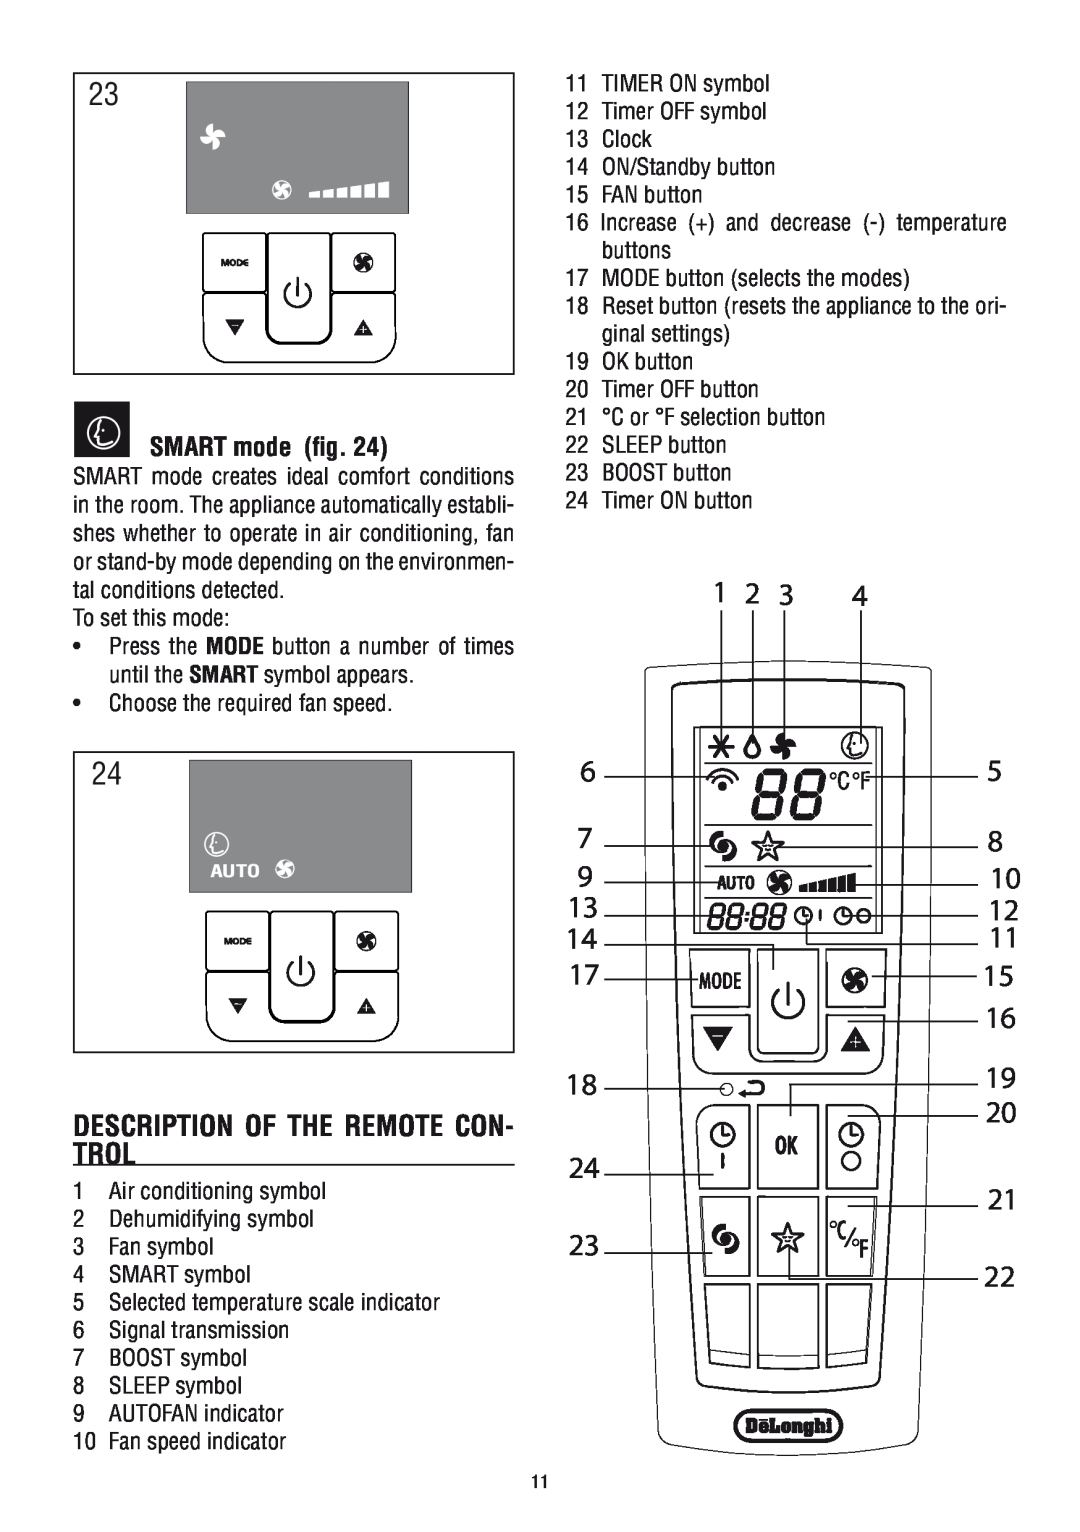 DeLonghi PAC WE 110 manual Description Of The Remote Con- Trol, SMART mode fig 